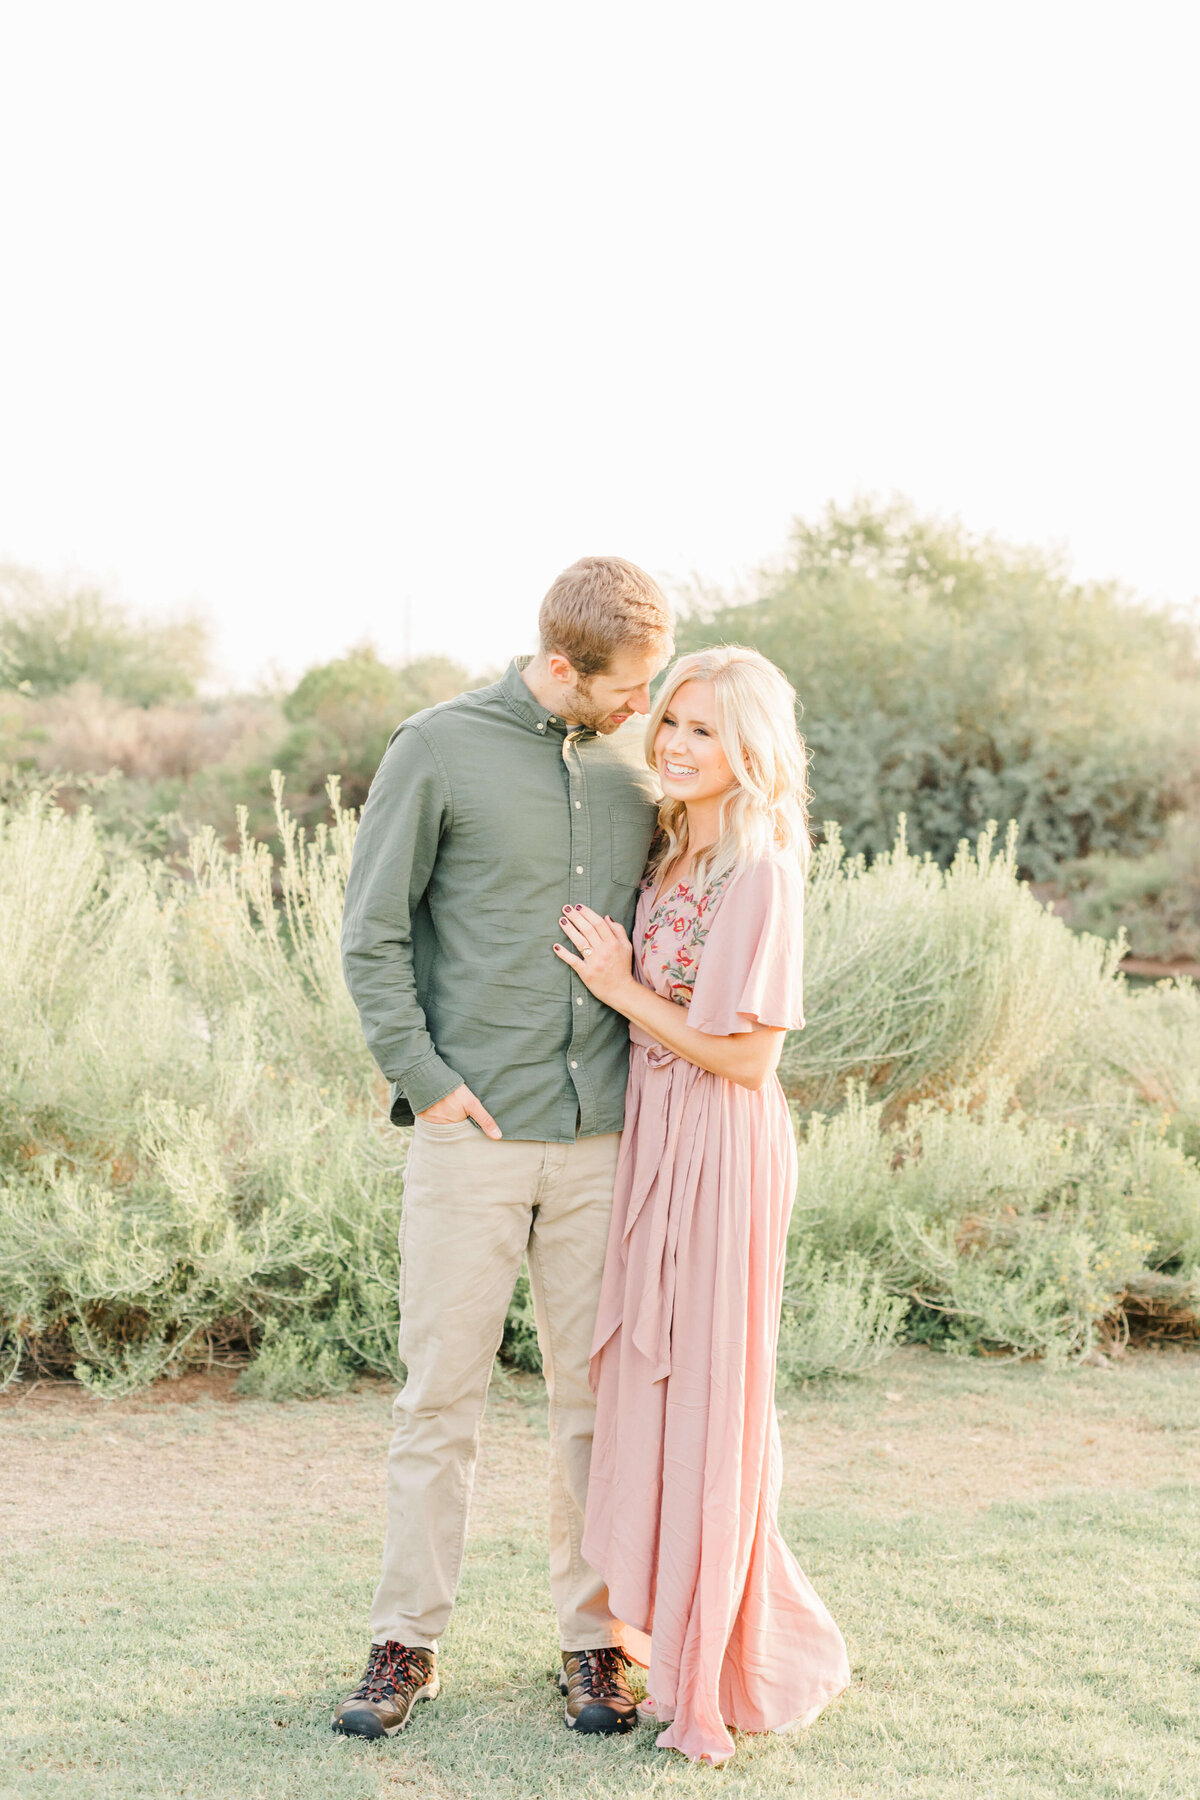 Arizona Couple, Family and Senior Photography - Bethie Grondin0009